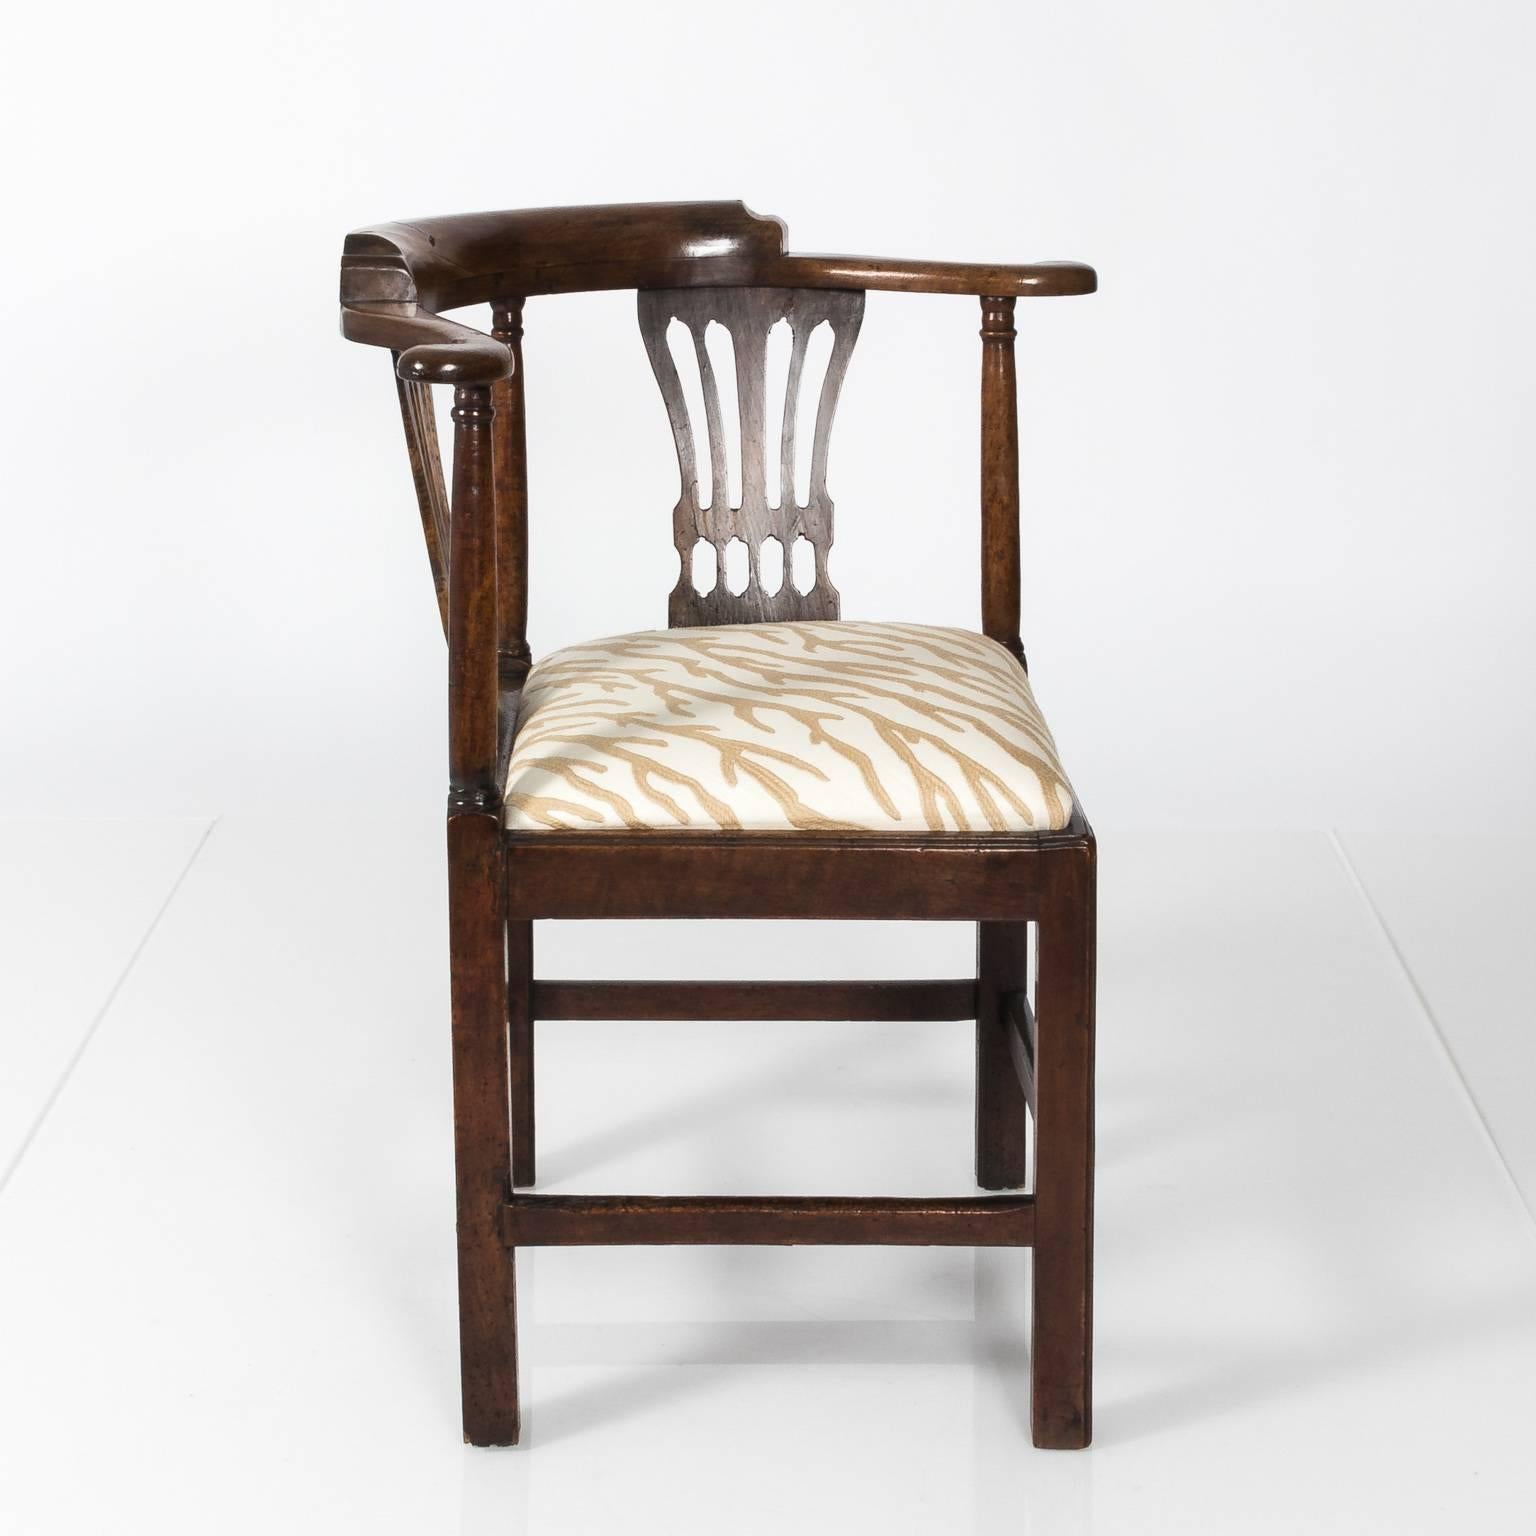 George III style corner chair in walnut, circa late 18th century.
 